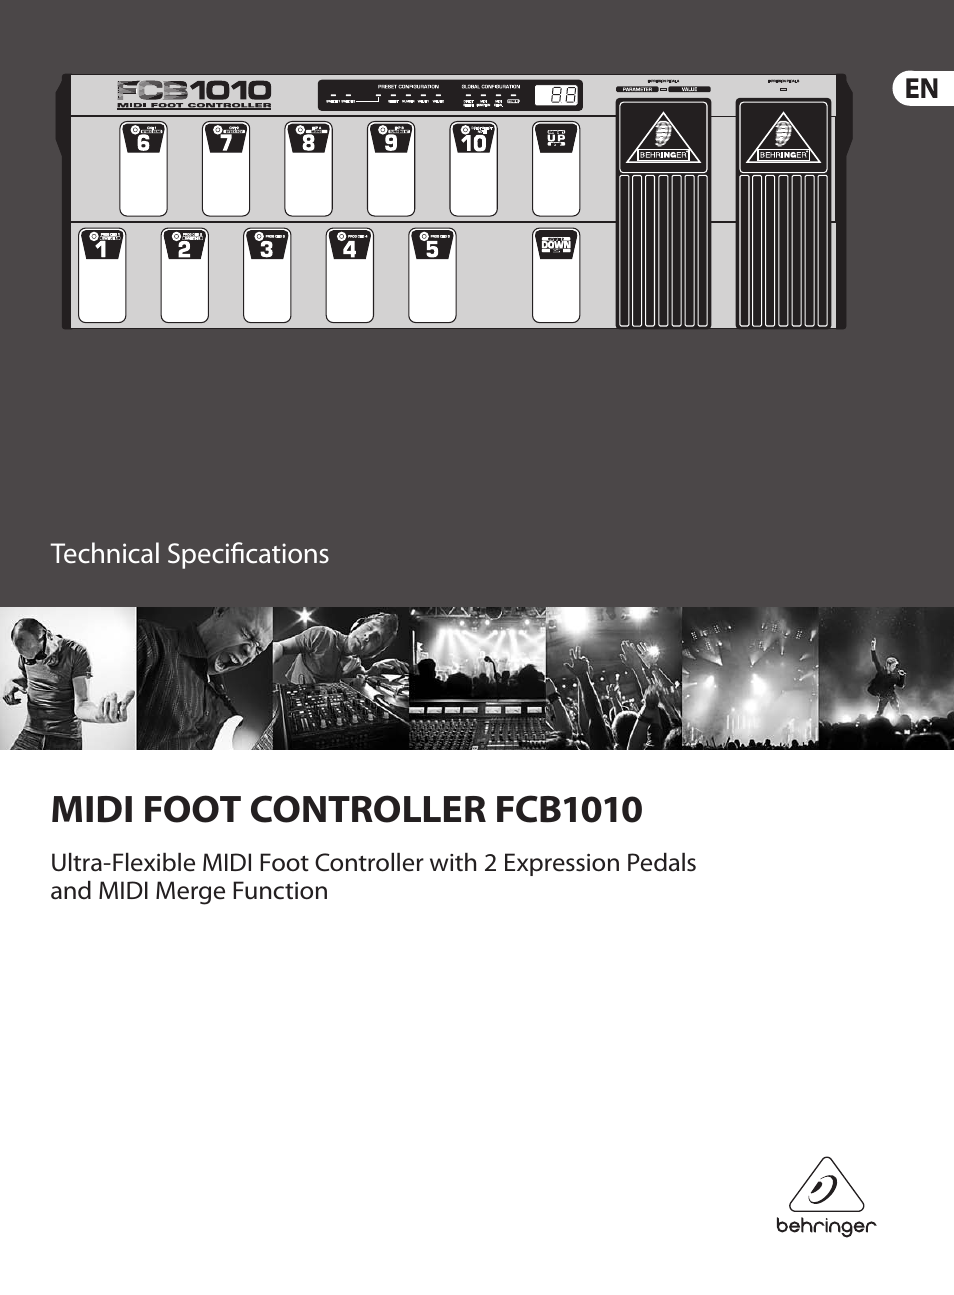 MIDI Foot Controller FCB1010